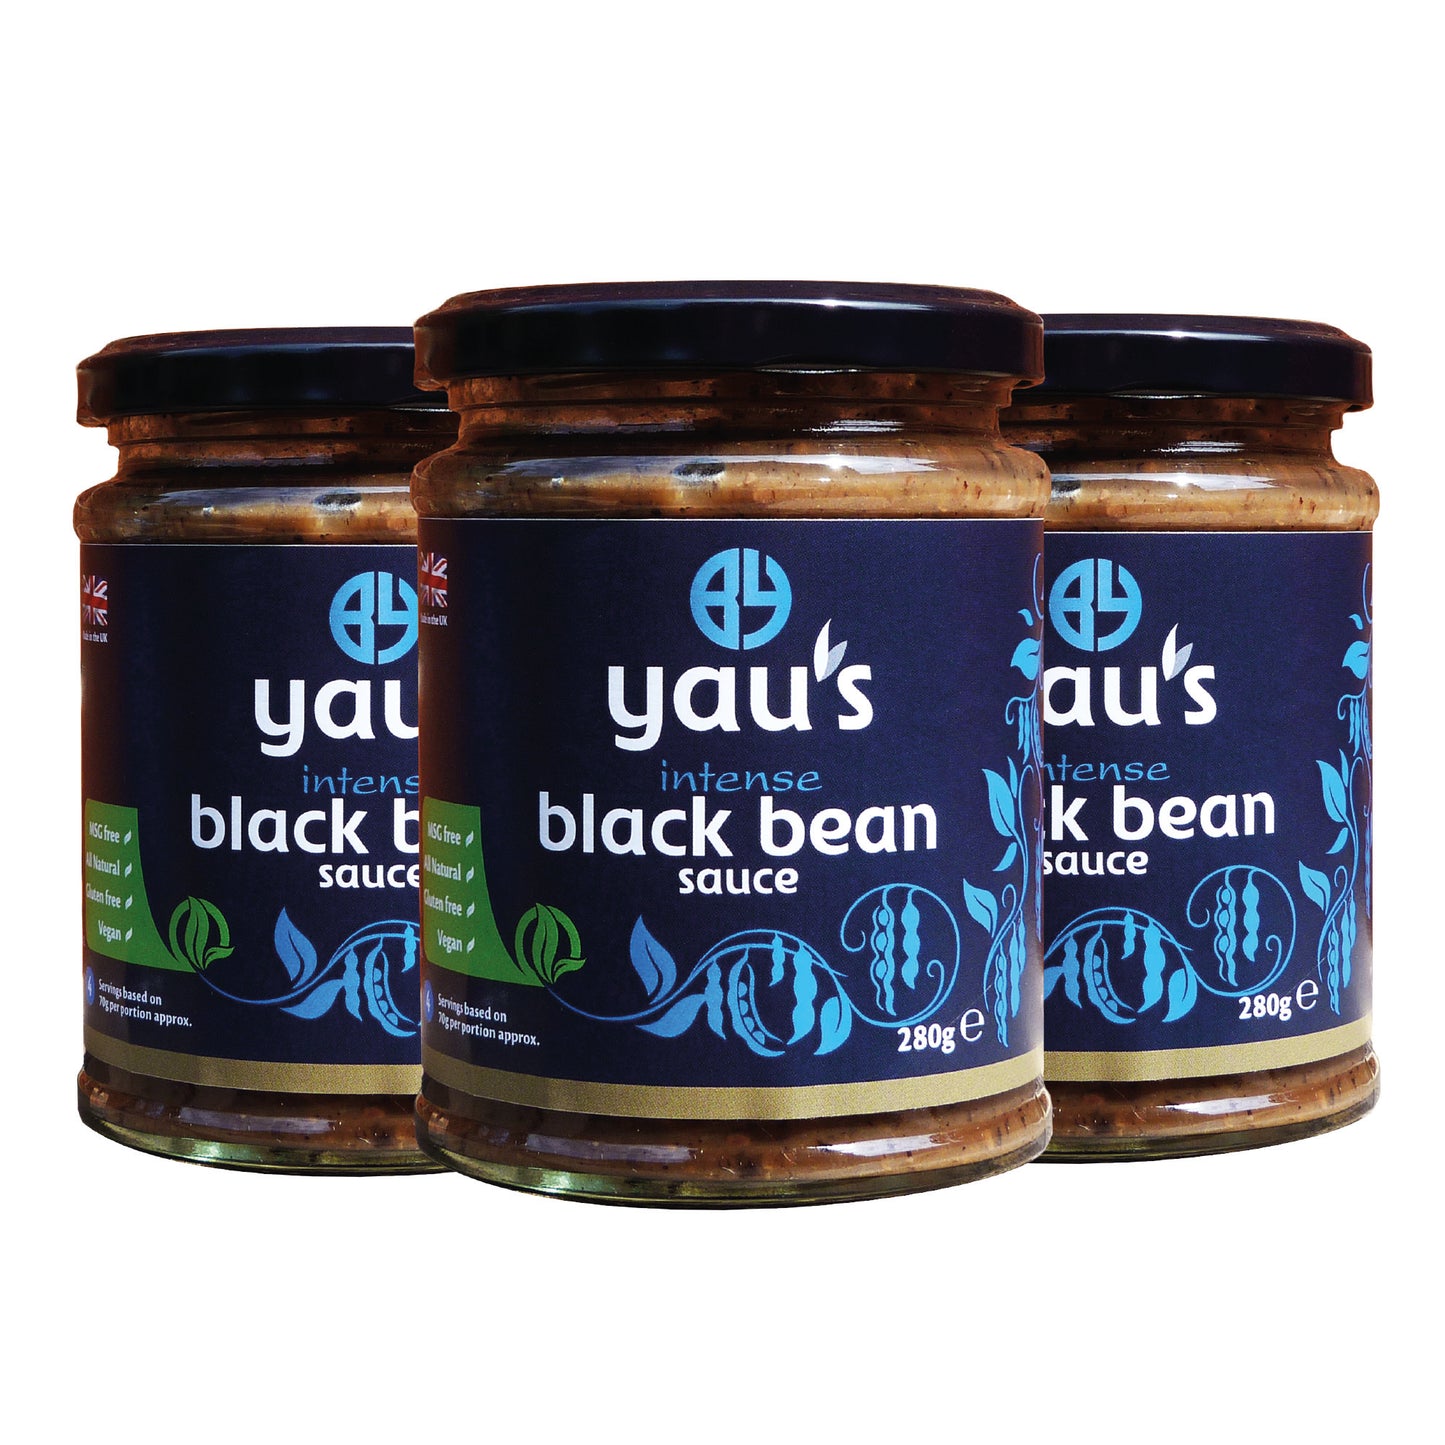 Yau's Intense Black Bean Sauce 280g